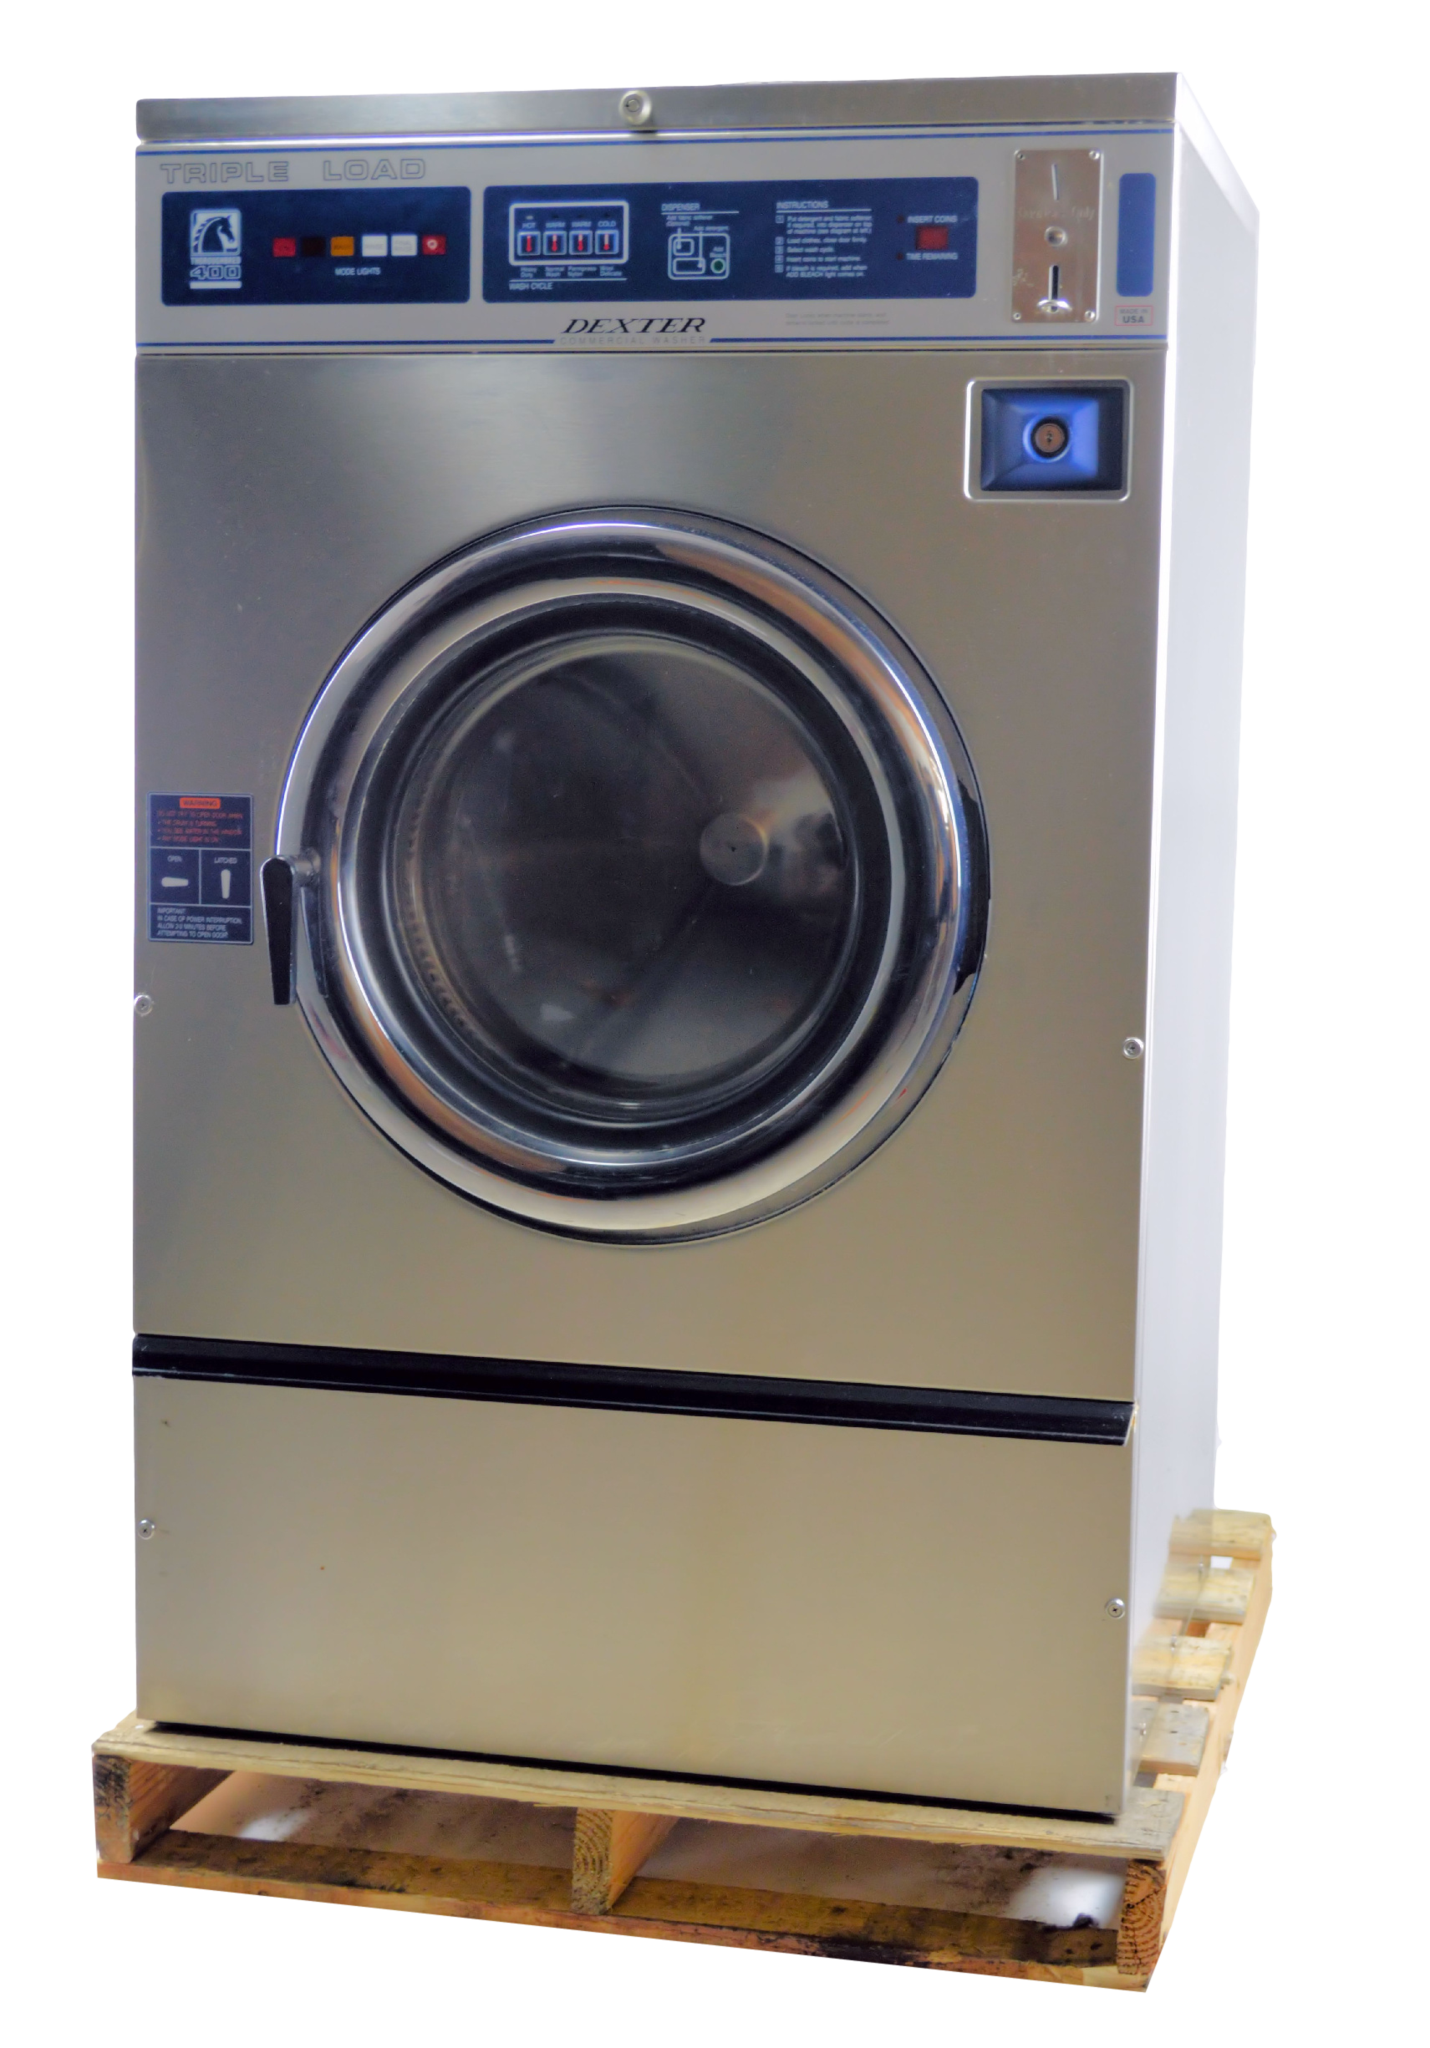 Dexter Commercial Laundry Equipment Solutions